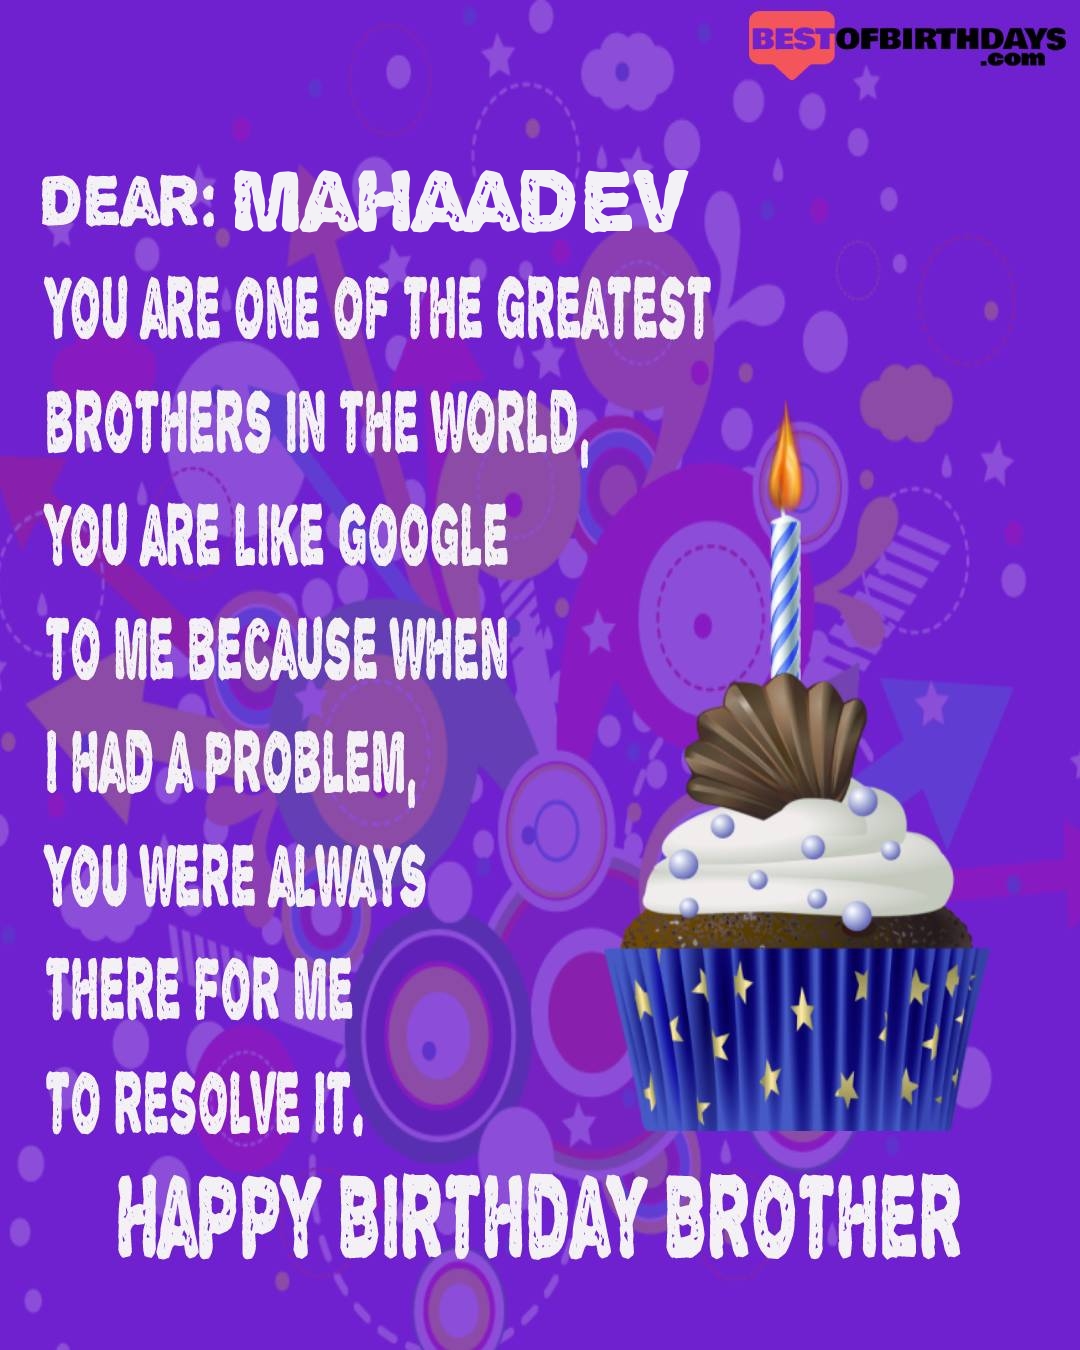 Happy birthday mahaadev bhai brother bro